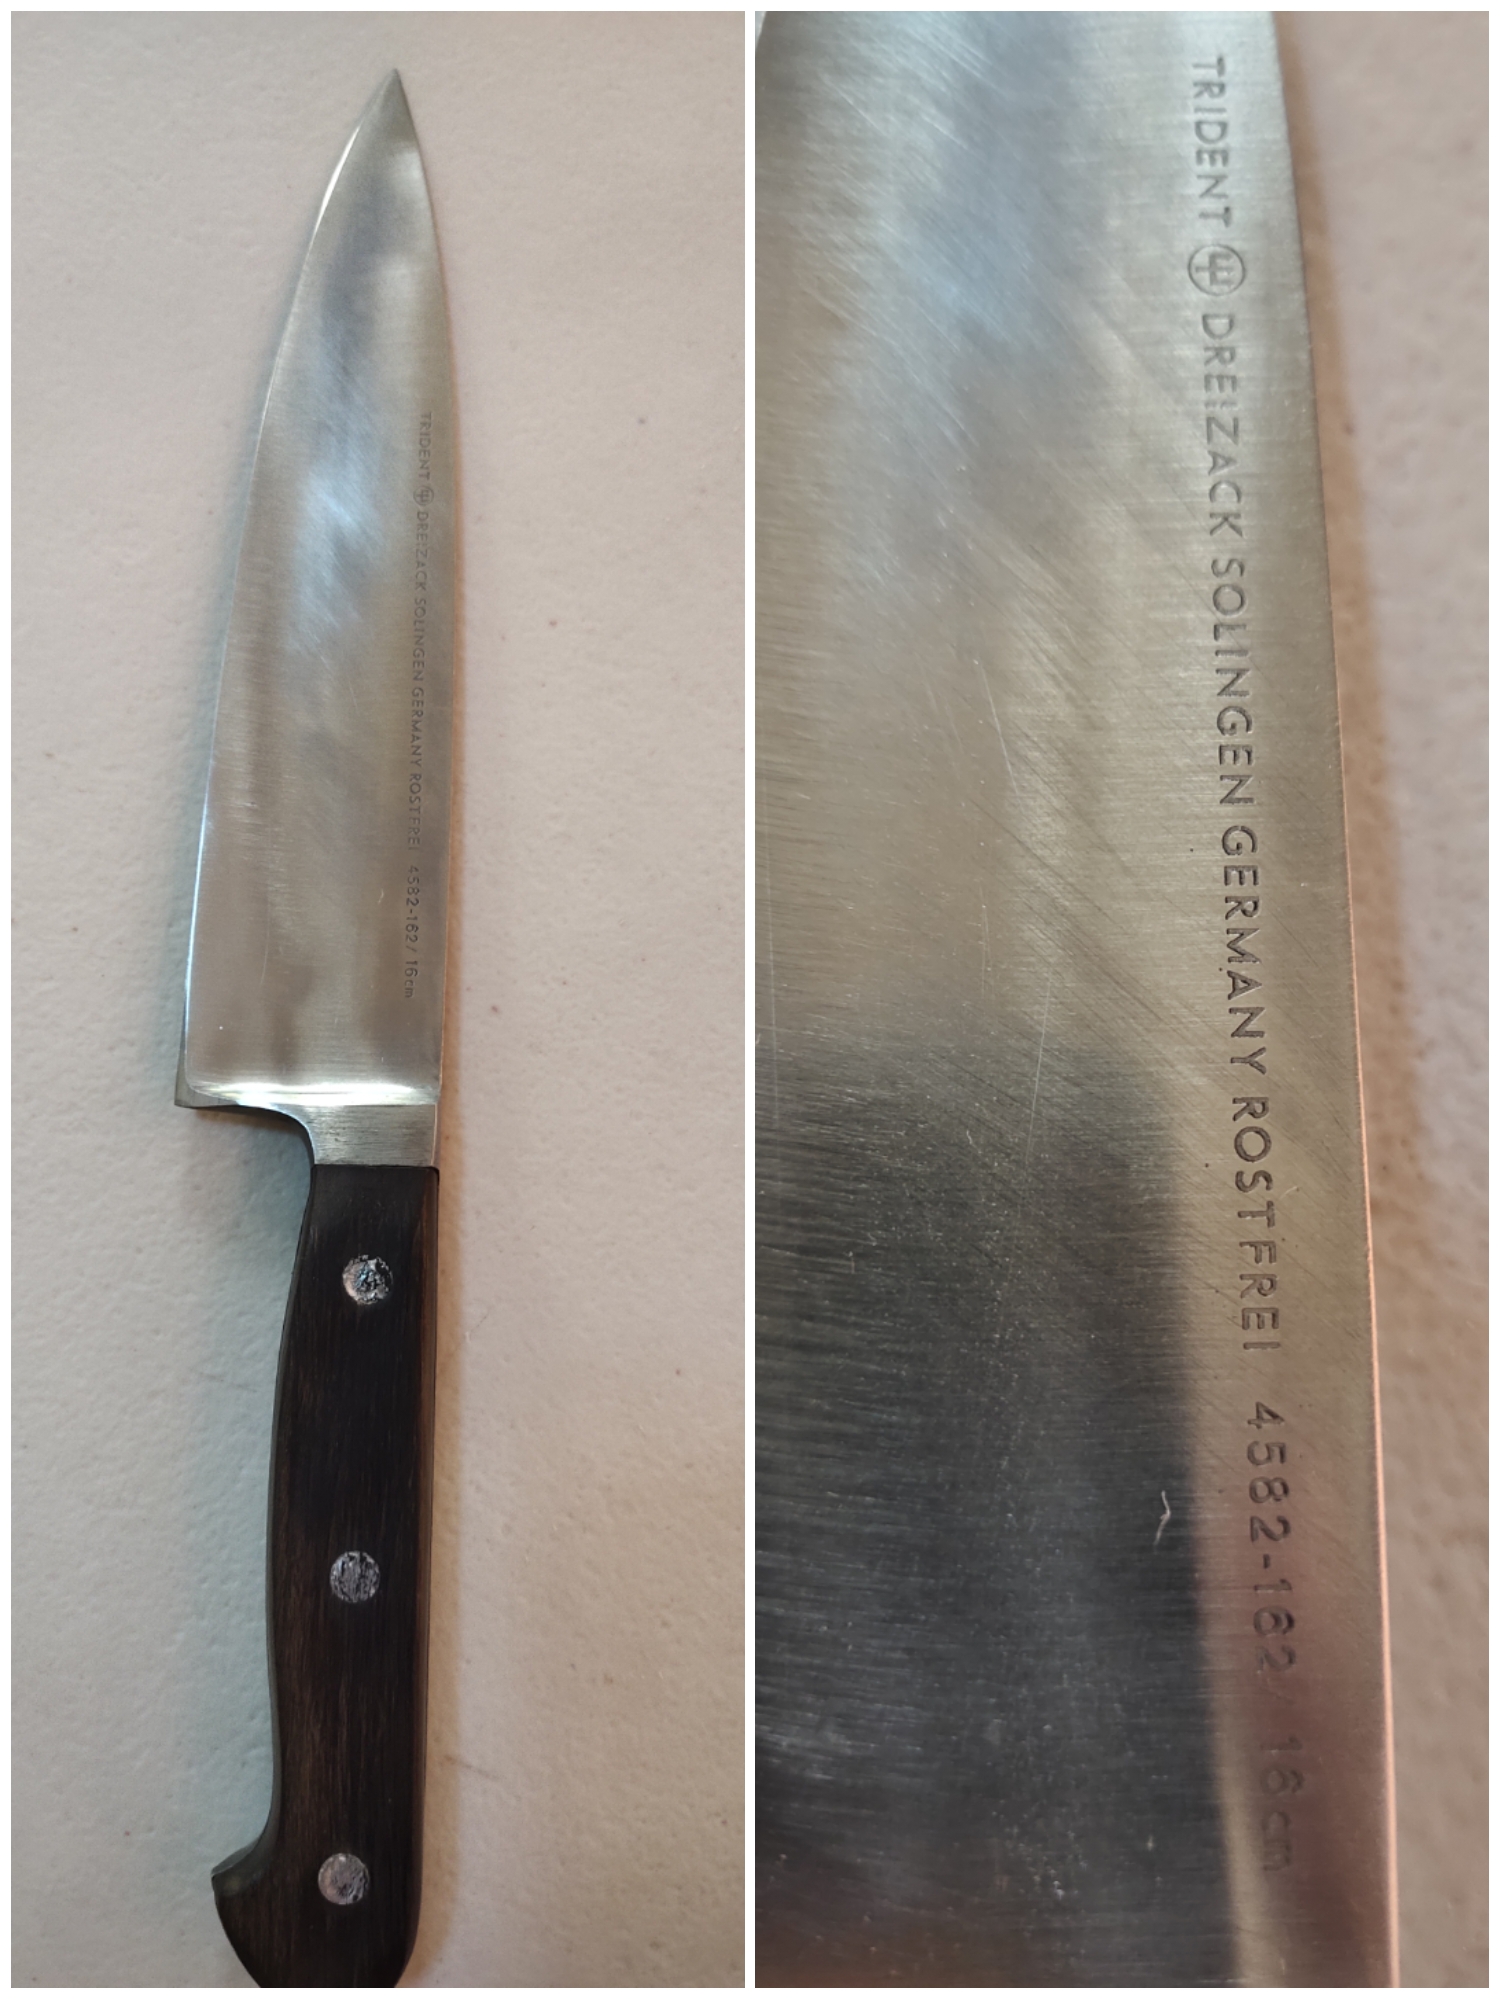 Wusthof trident dreizack 6.2inch Made in Germany chefs knife 